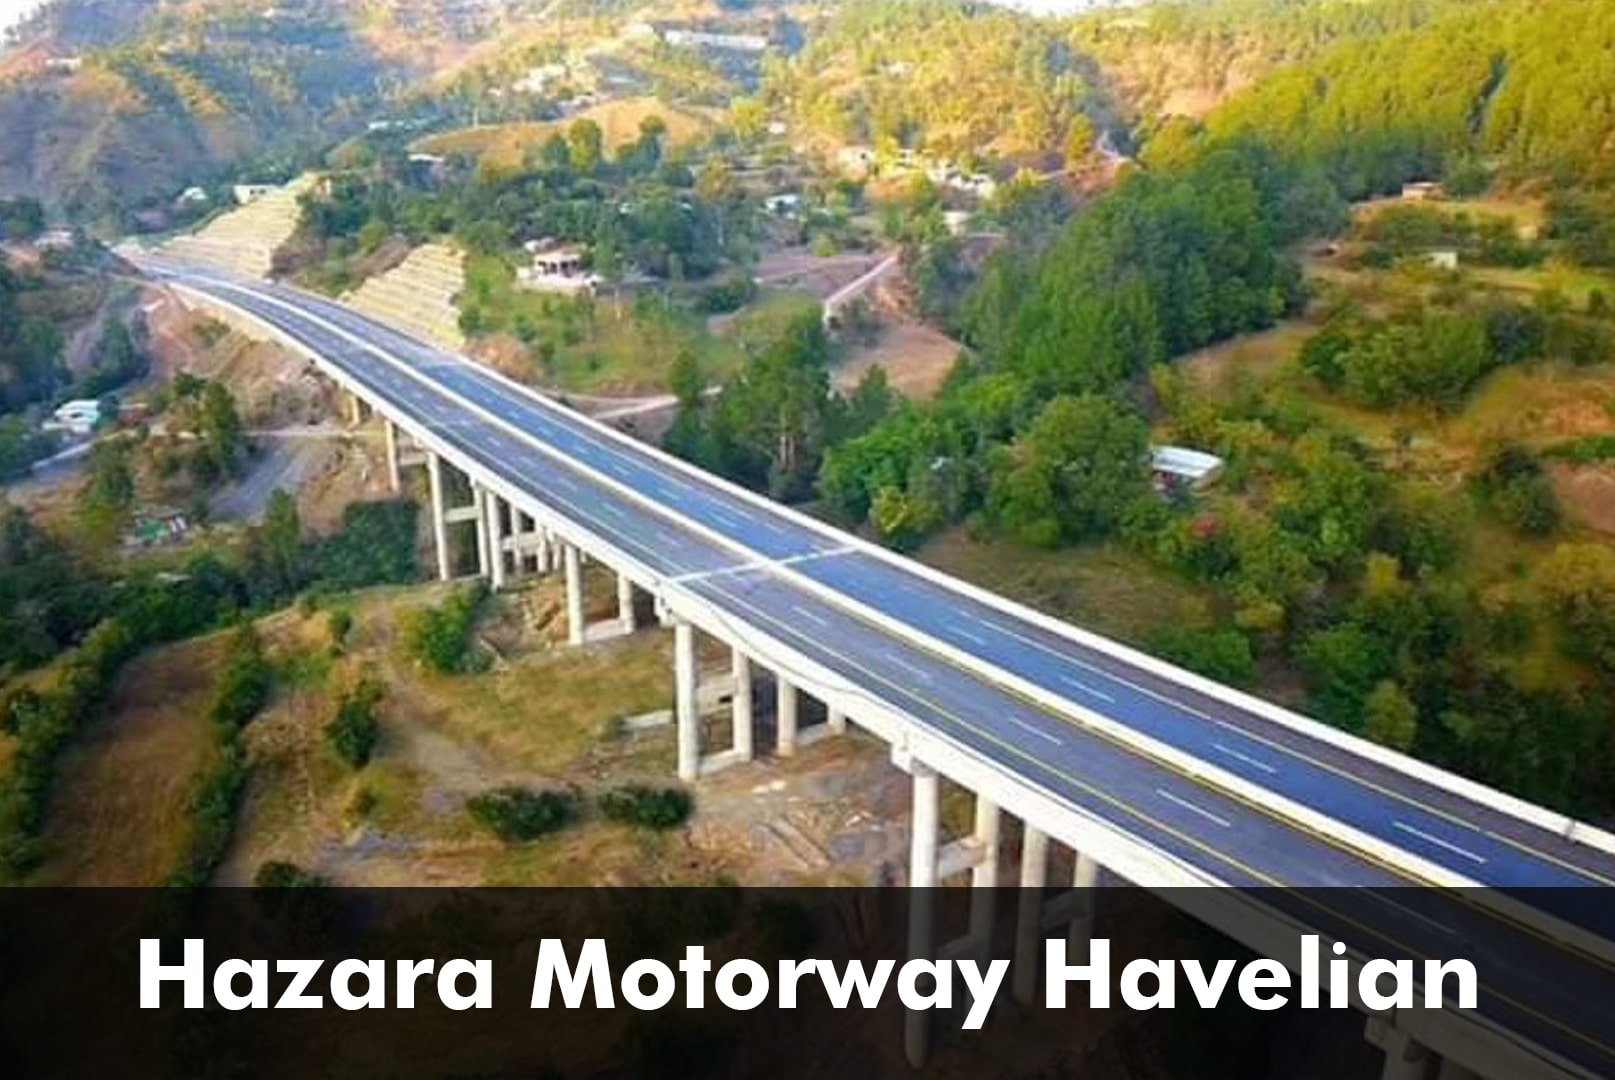 Hazara-Motorway-Havelian-section-E-35-01-1-min